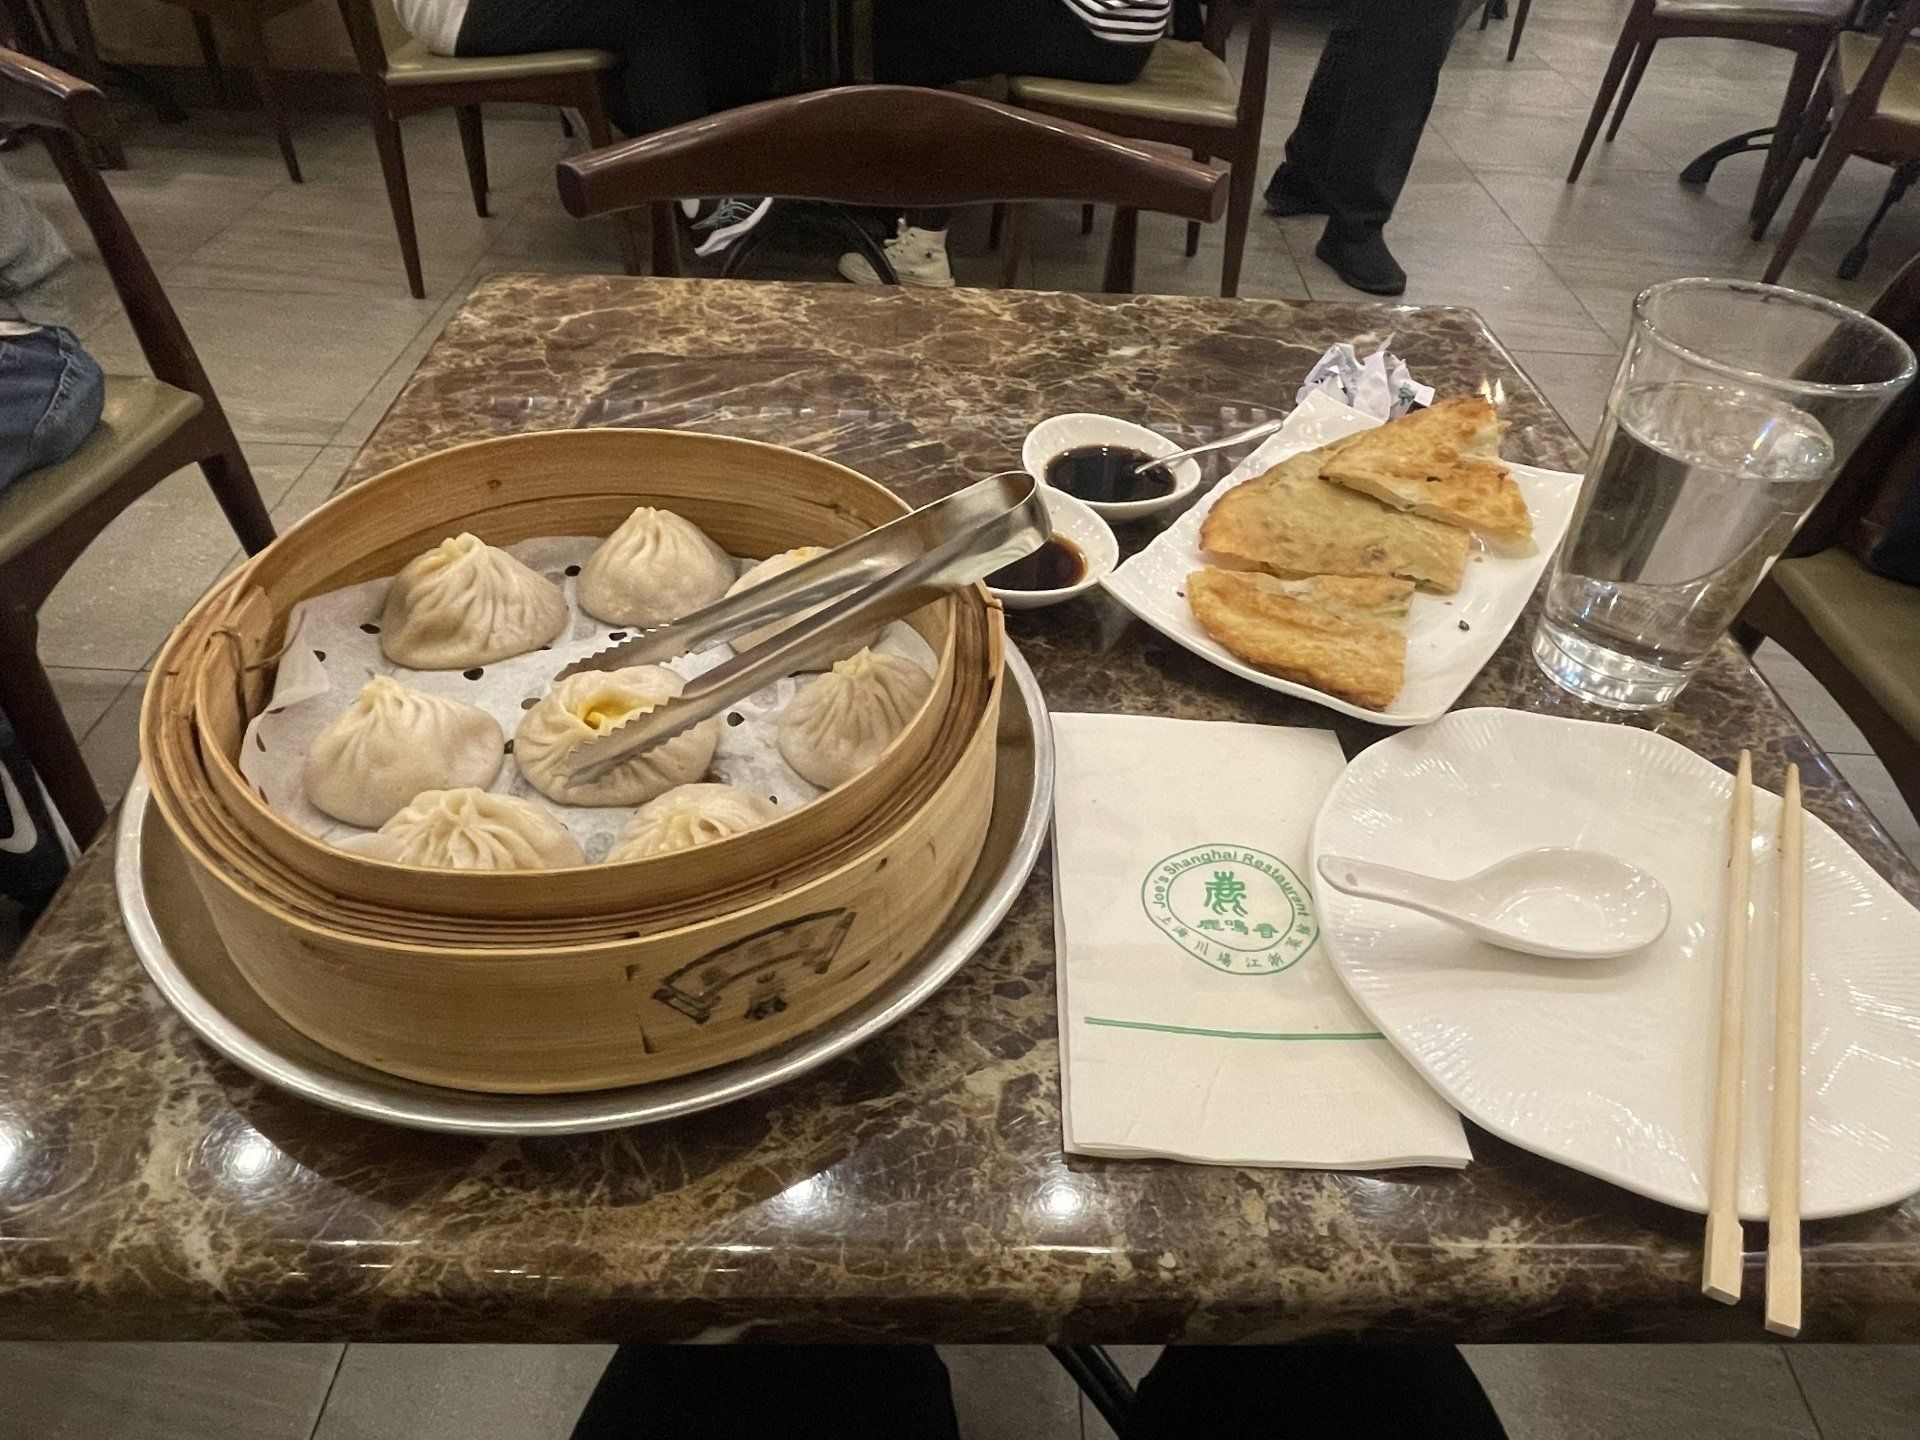 joe's-shanghai-soup-dumplings-nyc-2021